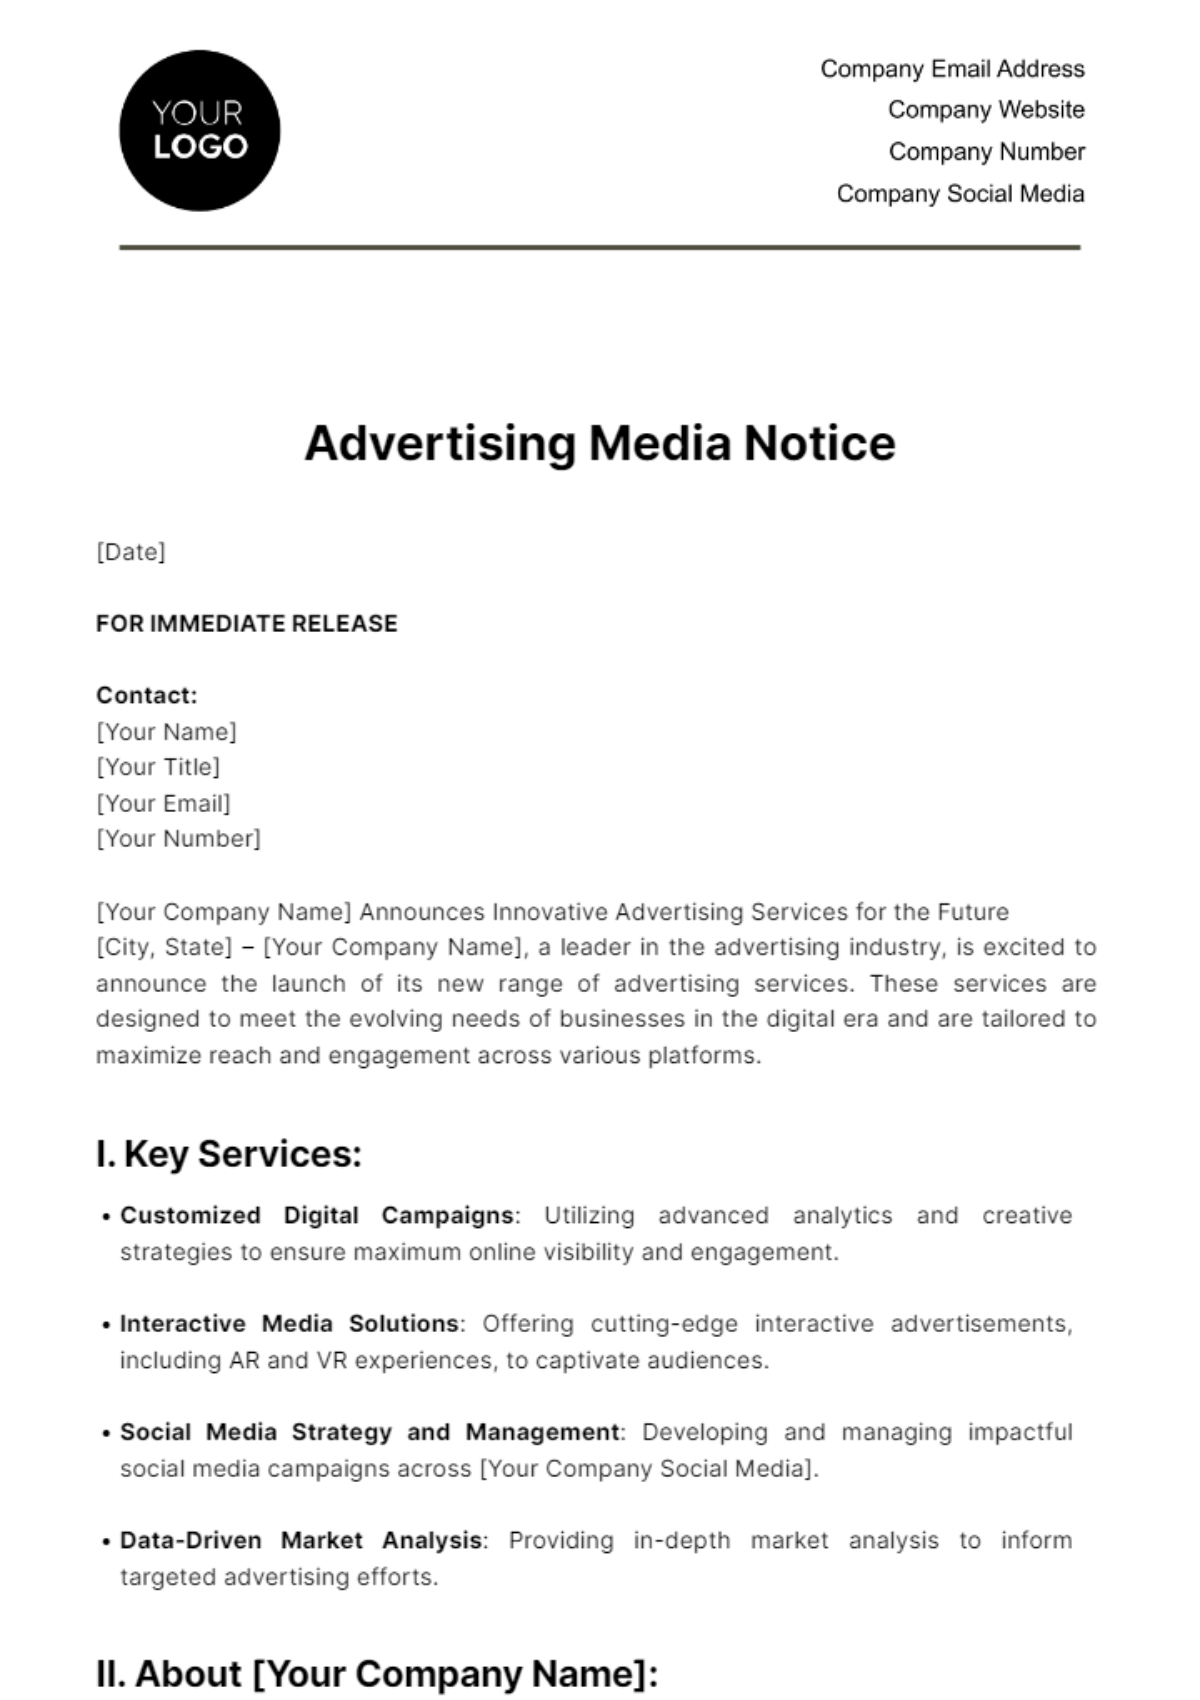 Advertising Media Notice Template